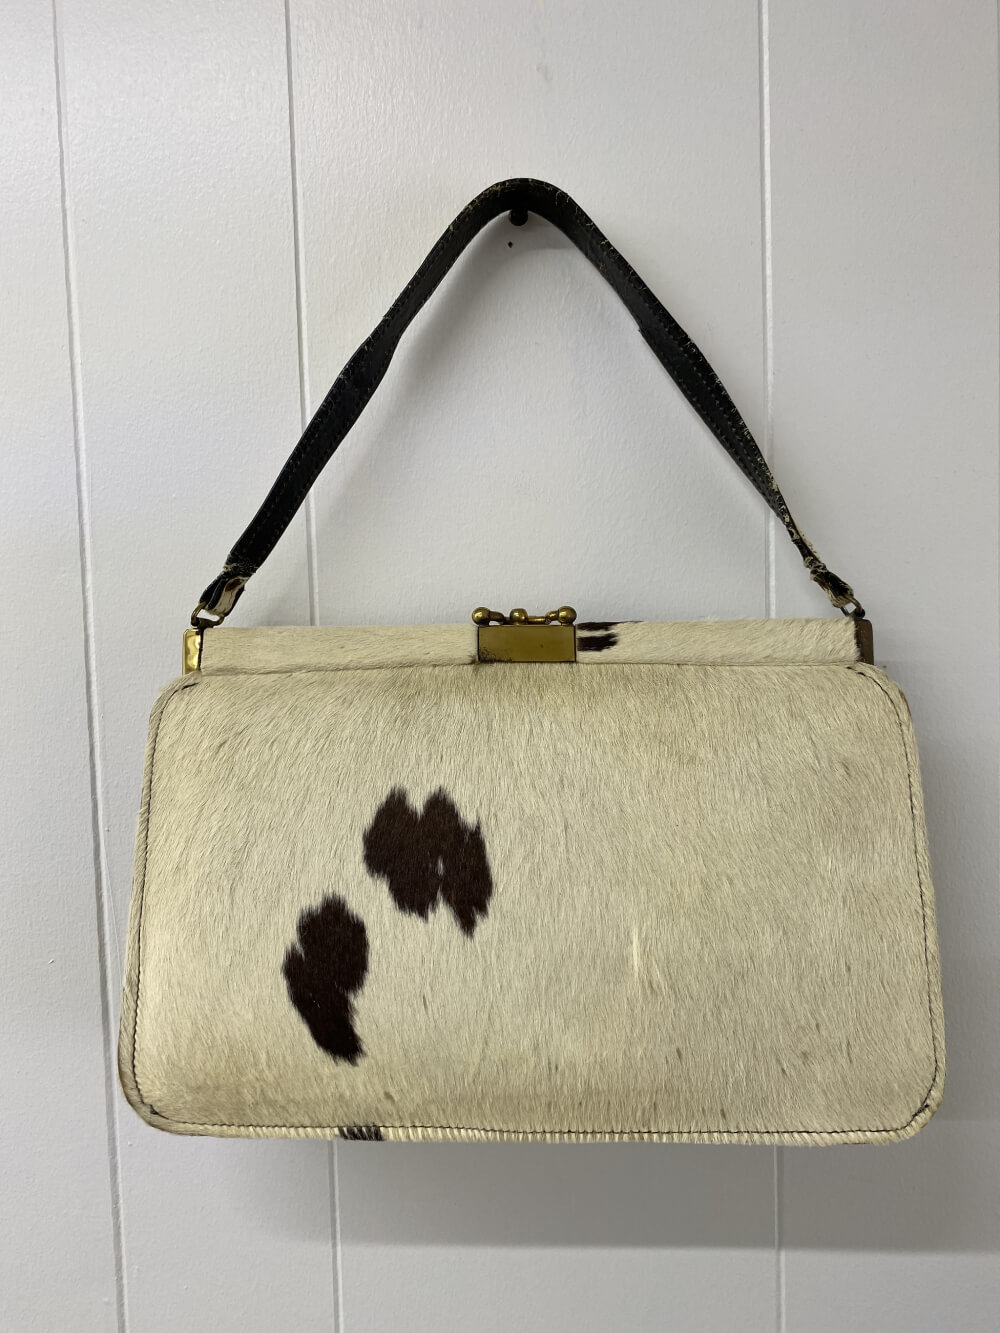 White Leather Vintage Hand Bag